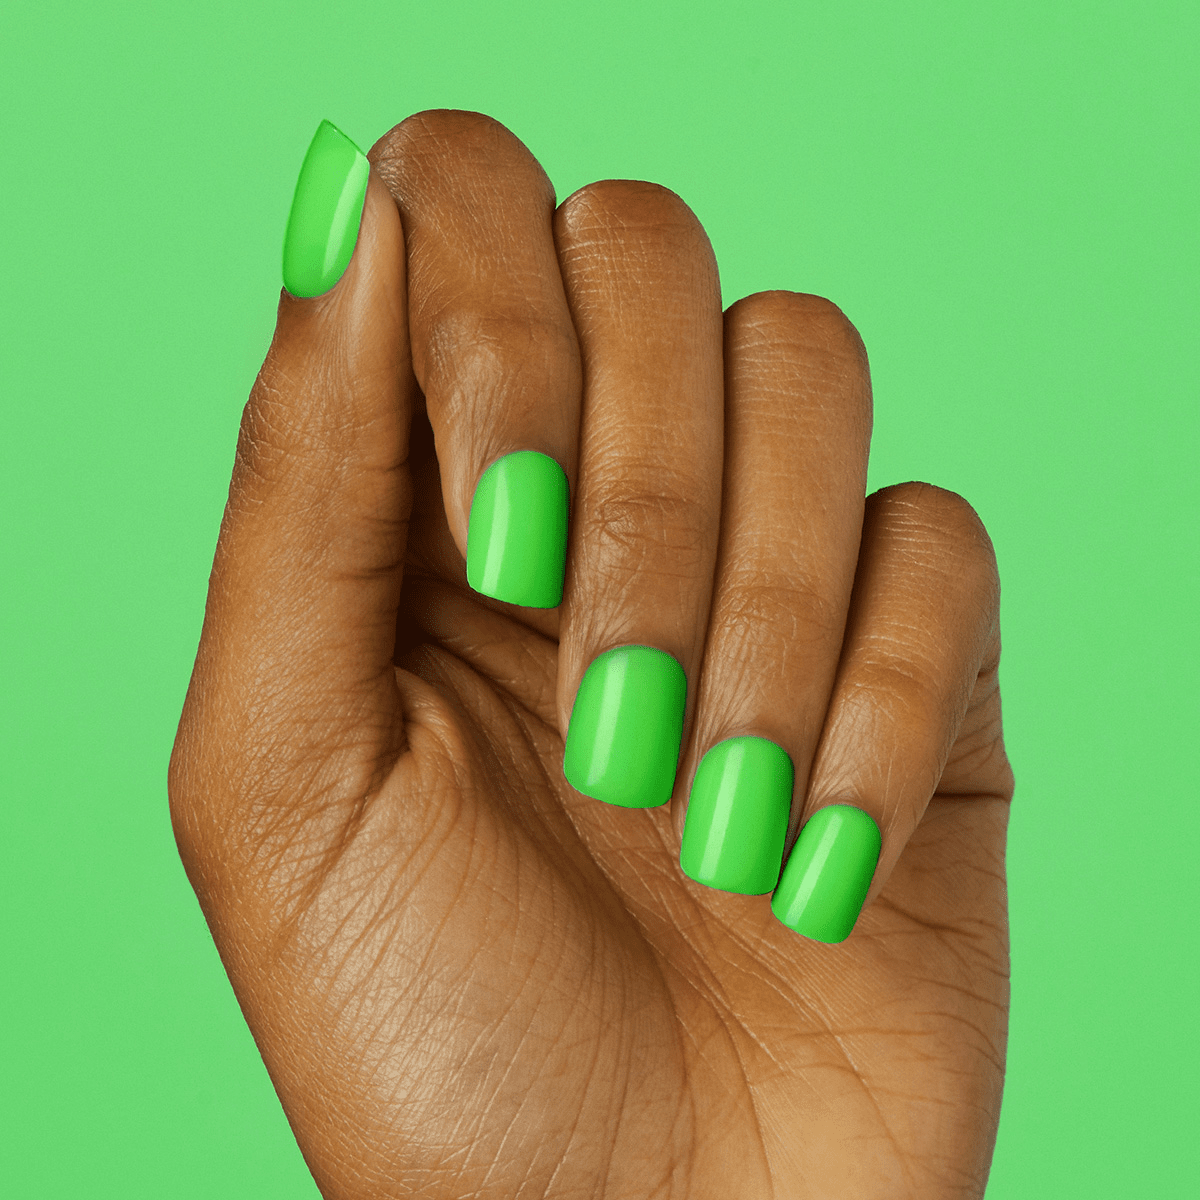 Make a Bold Statement with Slime-Green Nail Ideas - Katarina Van Derham